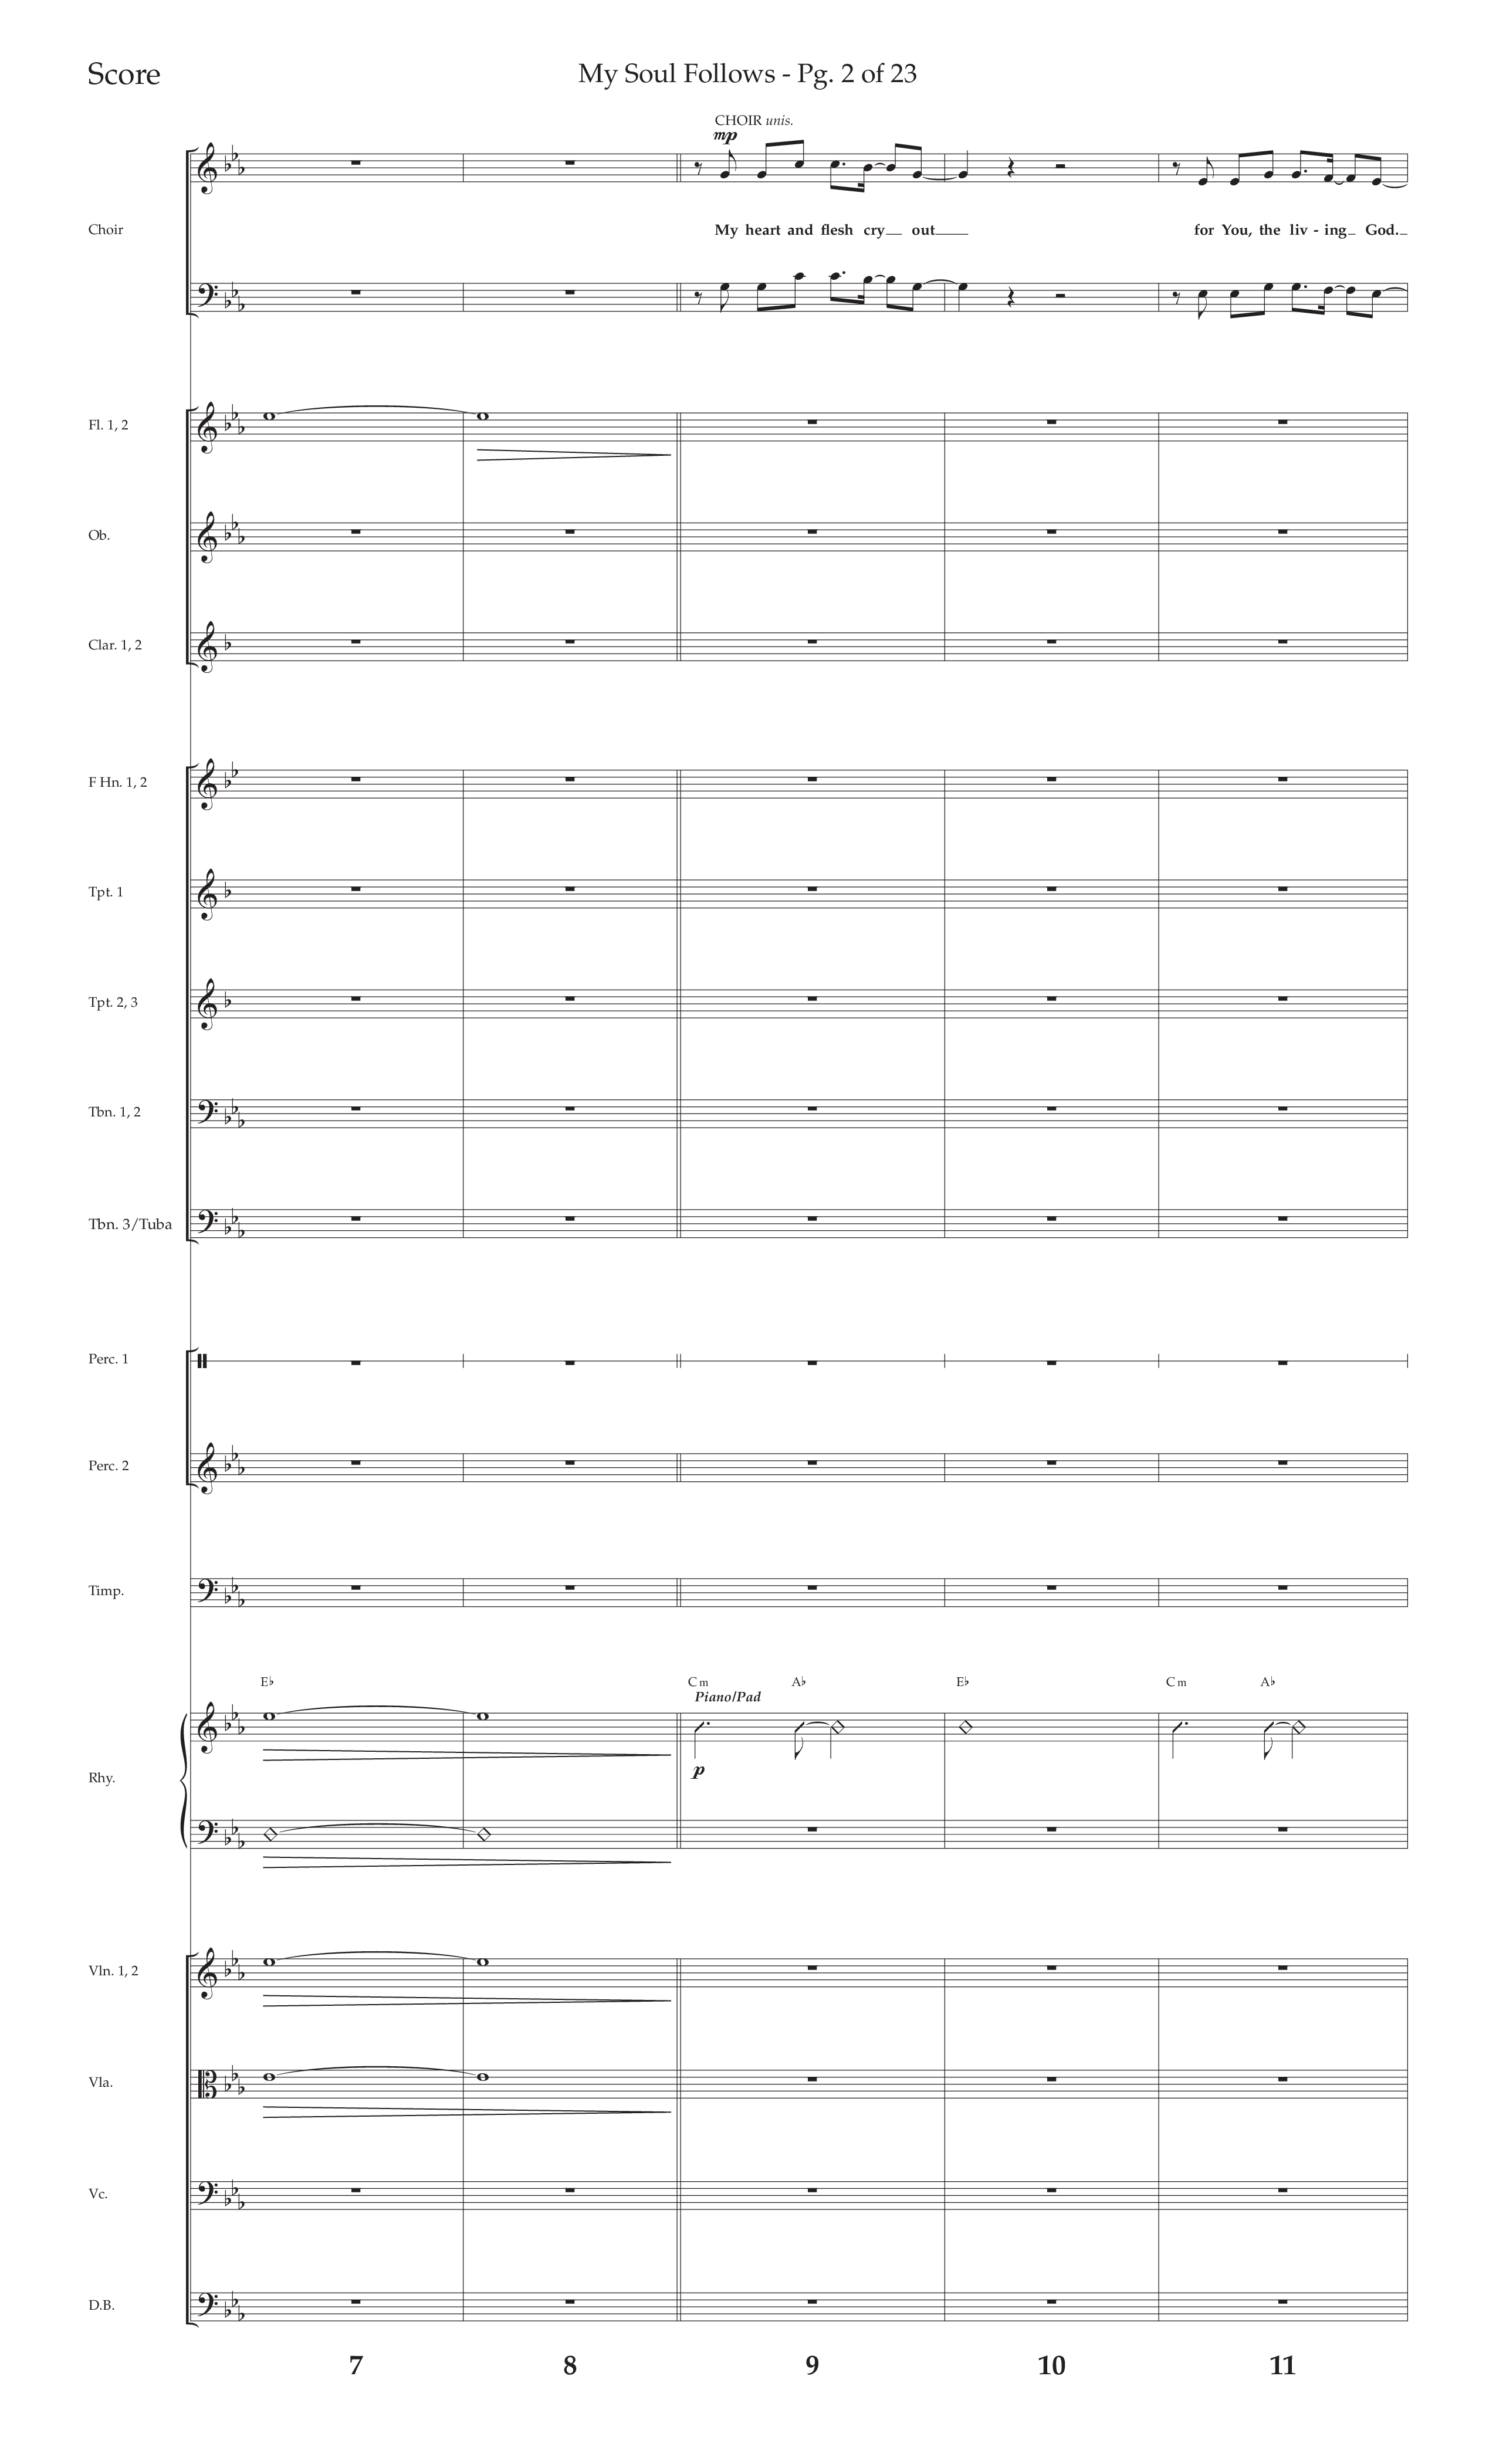 My Soul Follows (Choral Anthem SATB) Orchestration (Lifeway Choral / Arr. Nick Robertson)